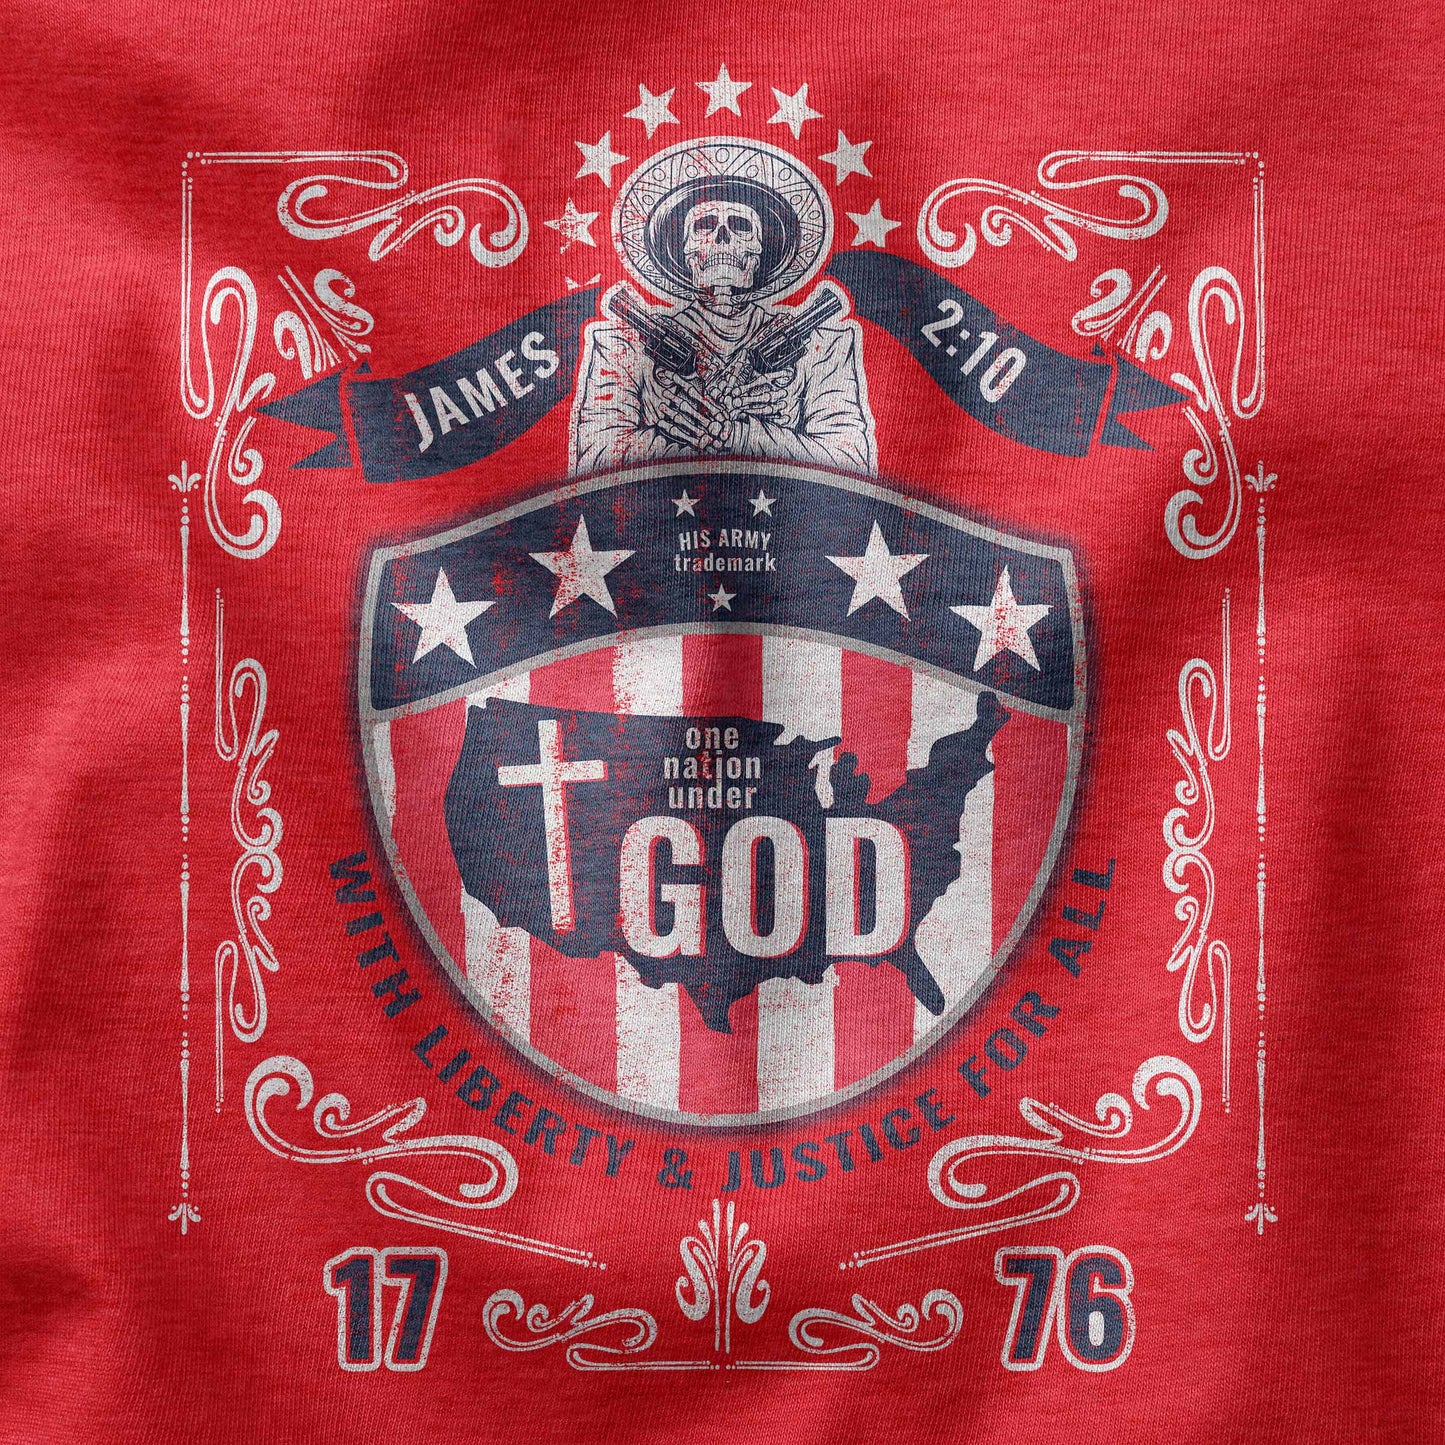 One Nation under God Christian patriot t-shirt design closeup